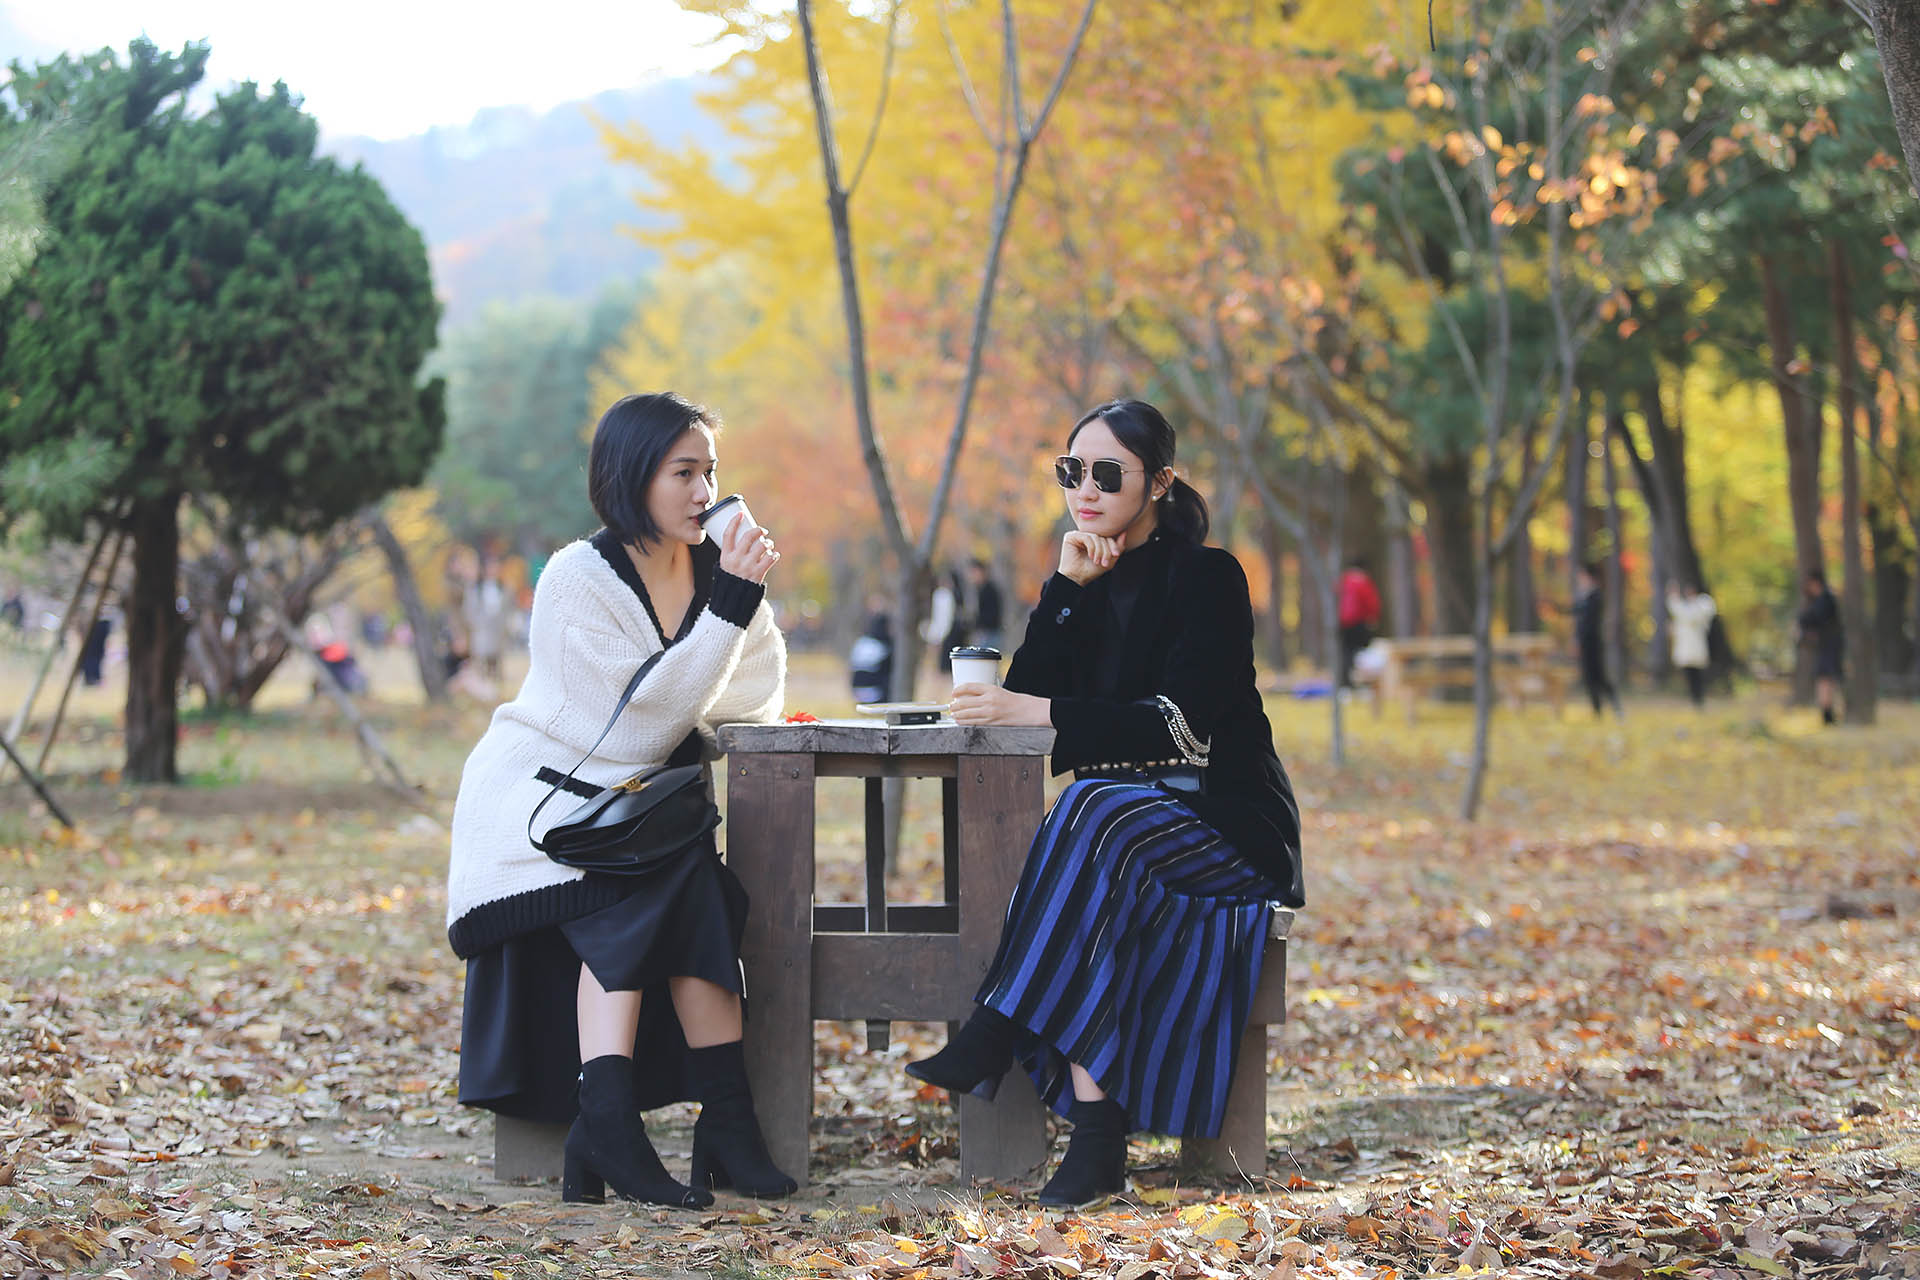 'Paparazzi snaps' concept photo getting popular in Korea